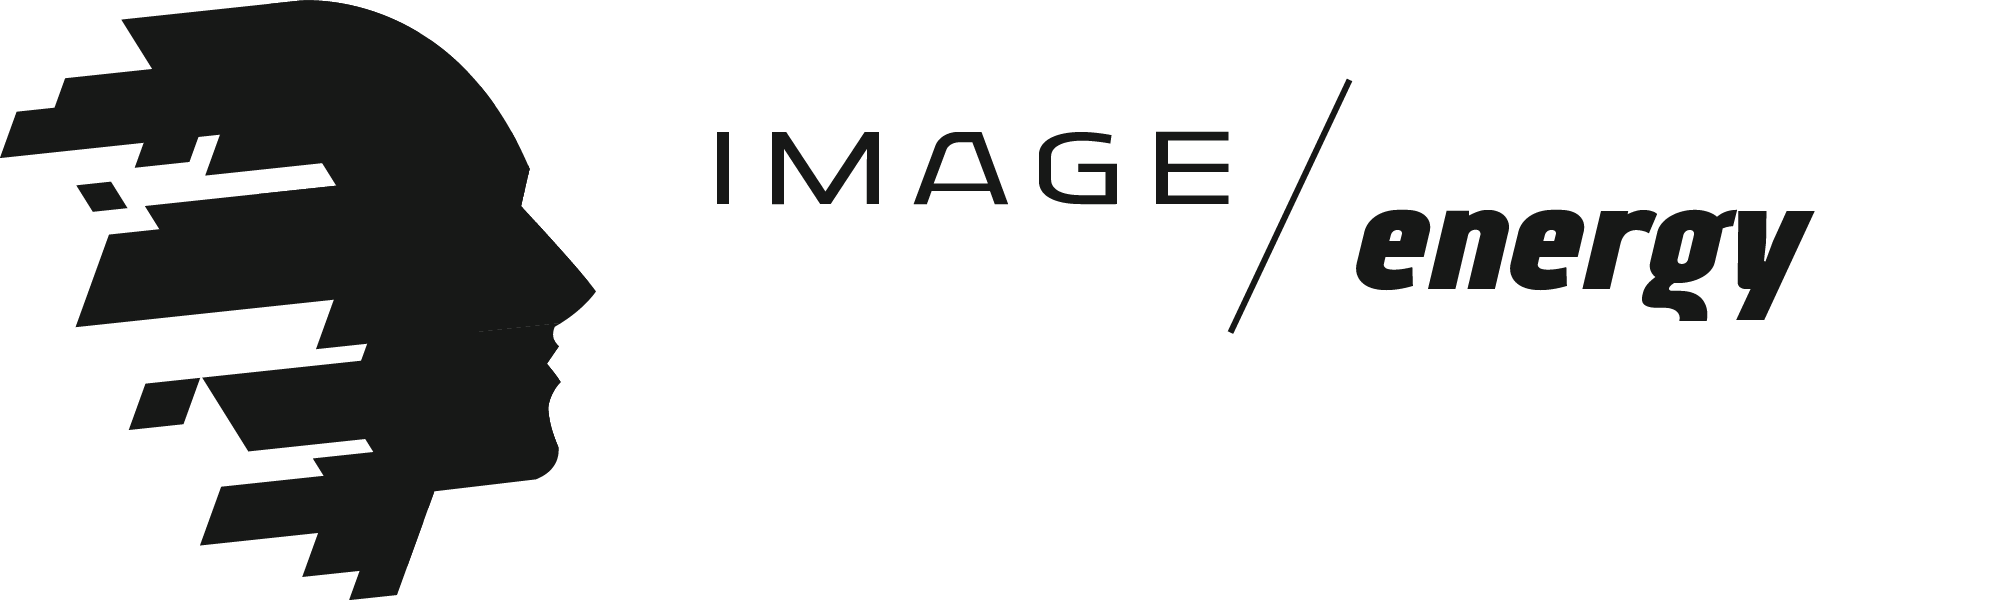 IMAGE ENERGY │ Business Image │ Branding │ Strategy